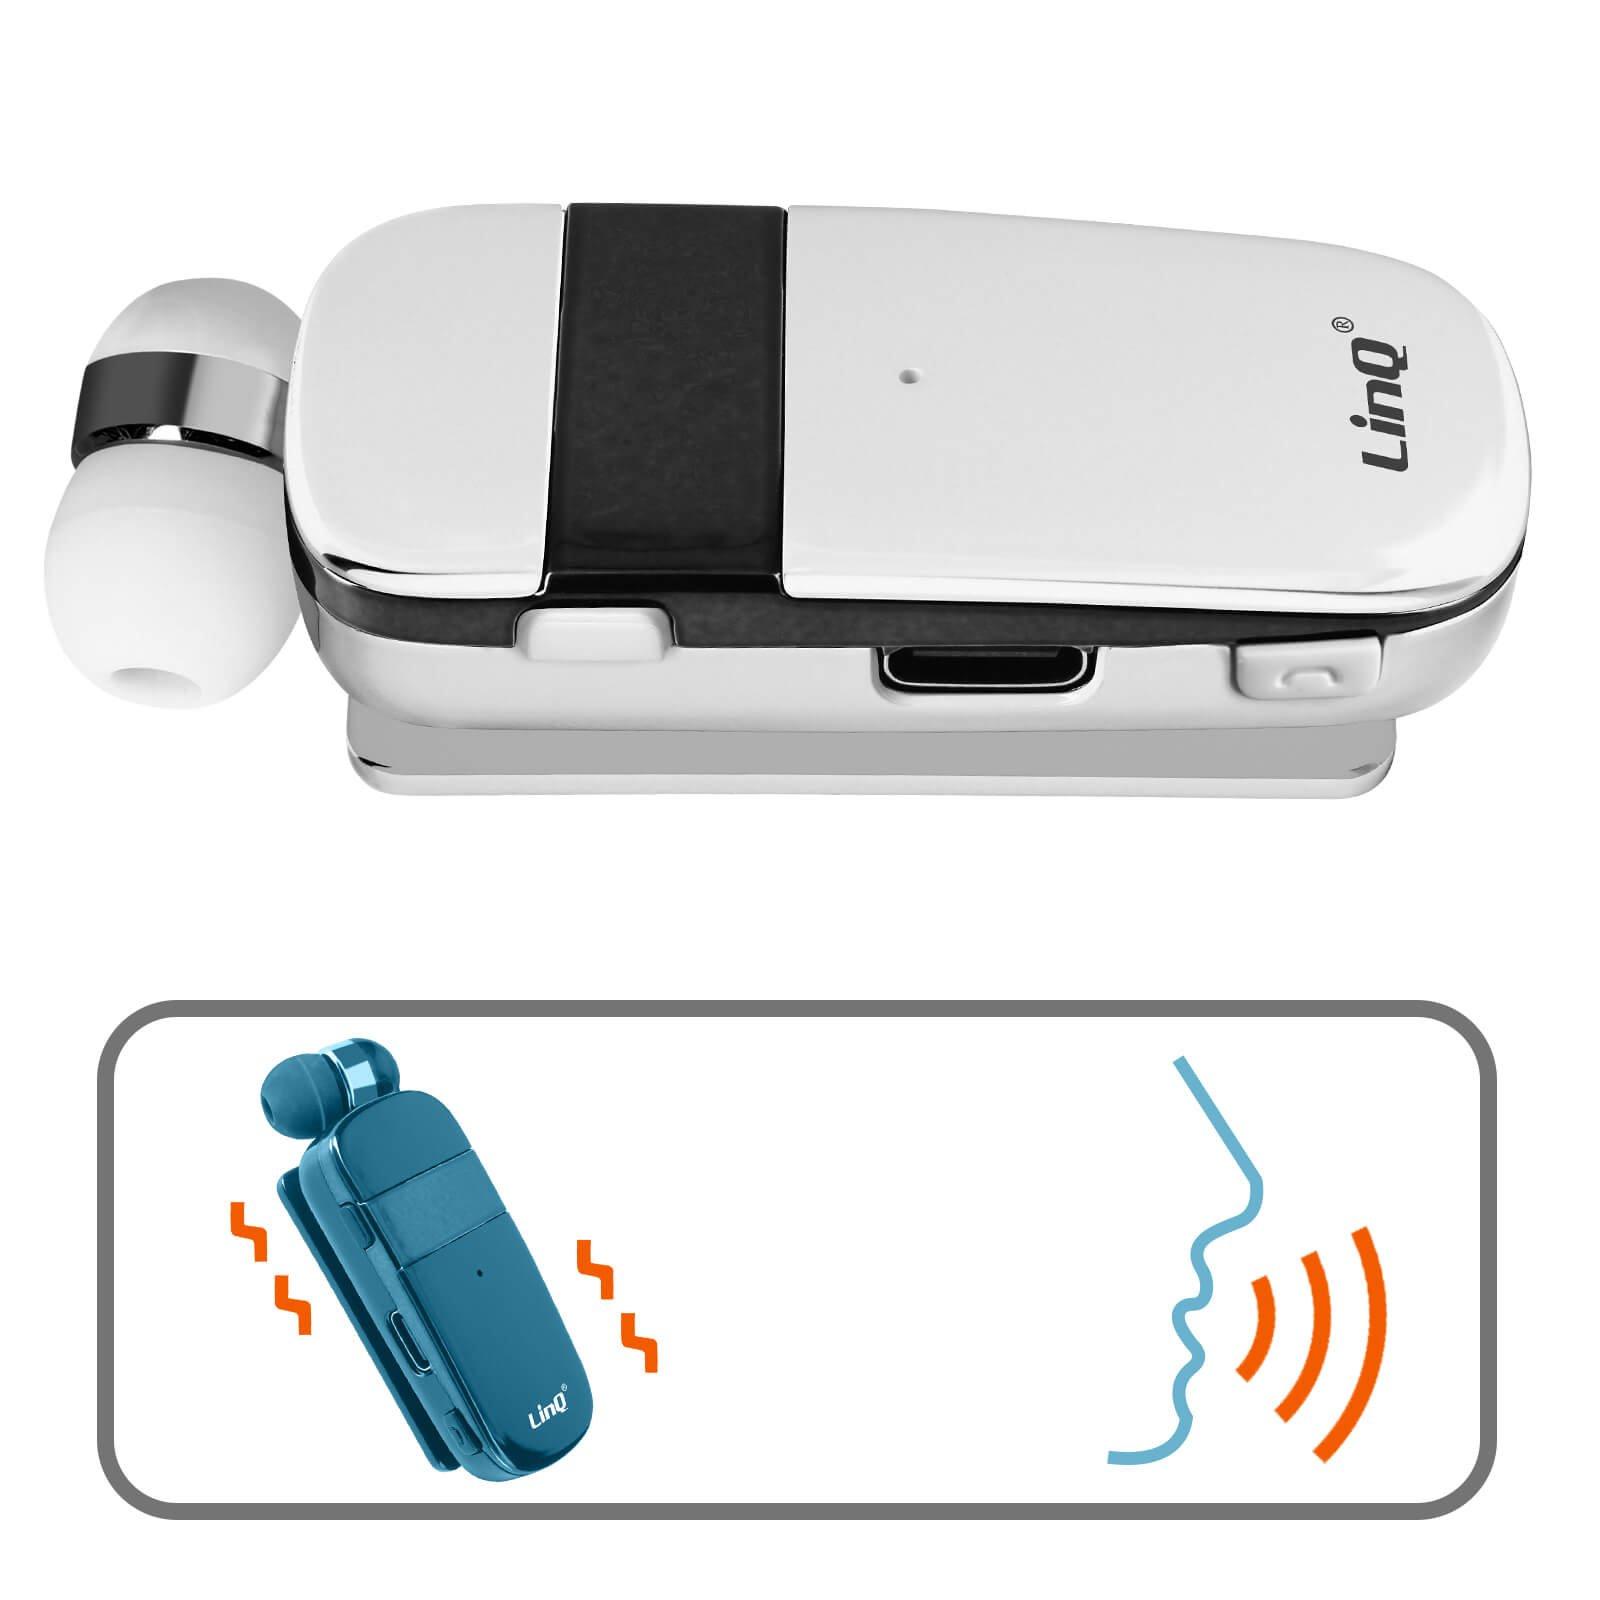 Avizar  LinQ R8344 Bluetooth Headset Weiß 